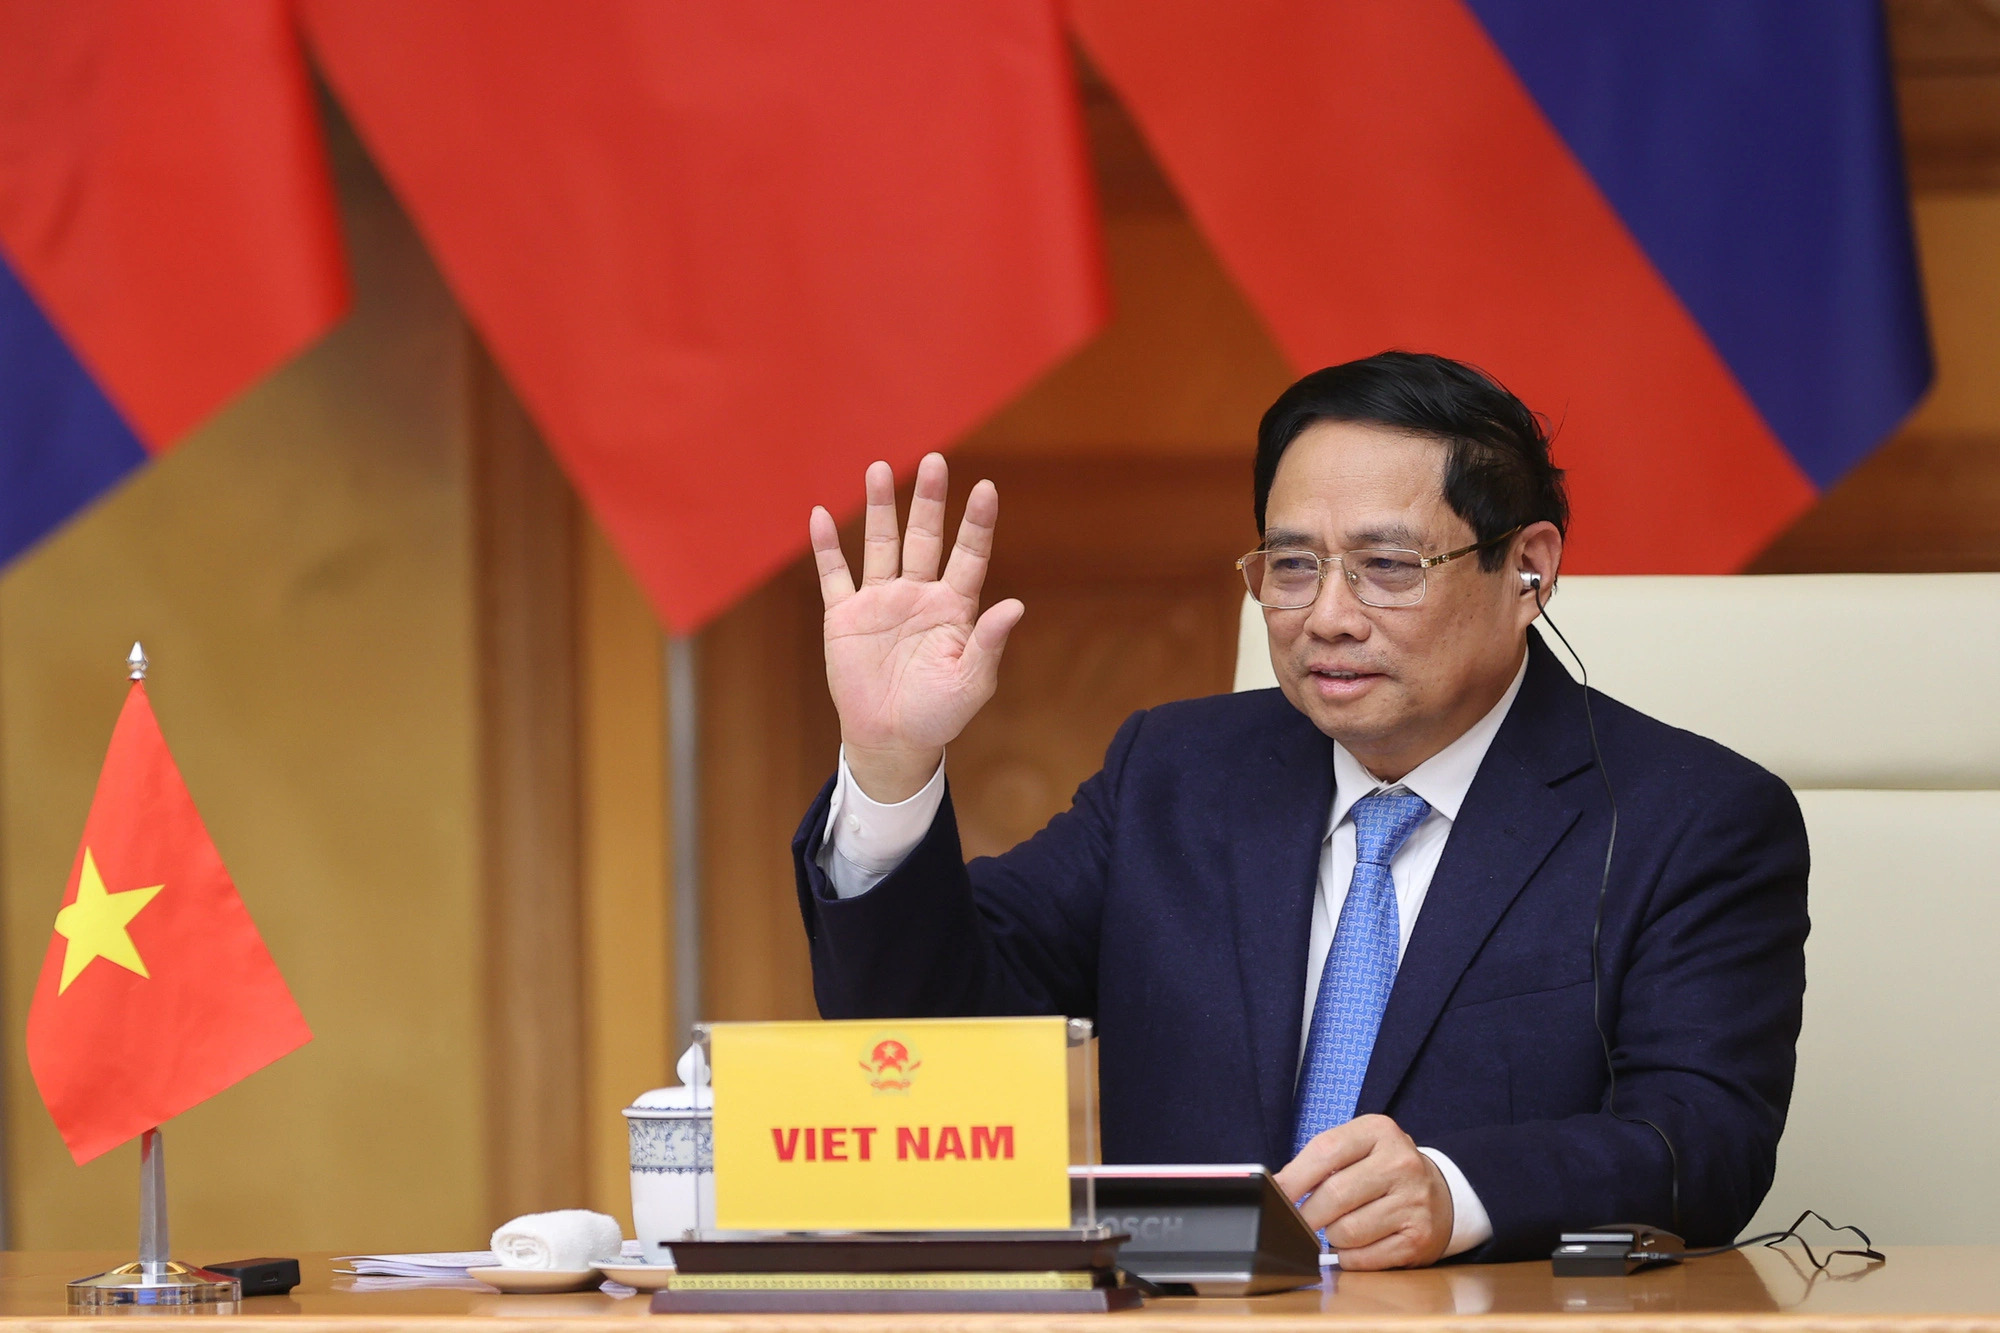 Vietnamese PM proposes 3 priority areas of cooperation at Mekong-Lancang summit